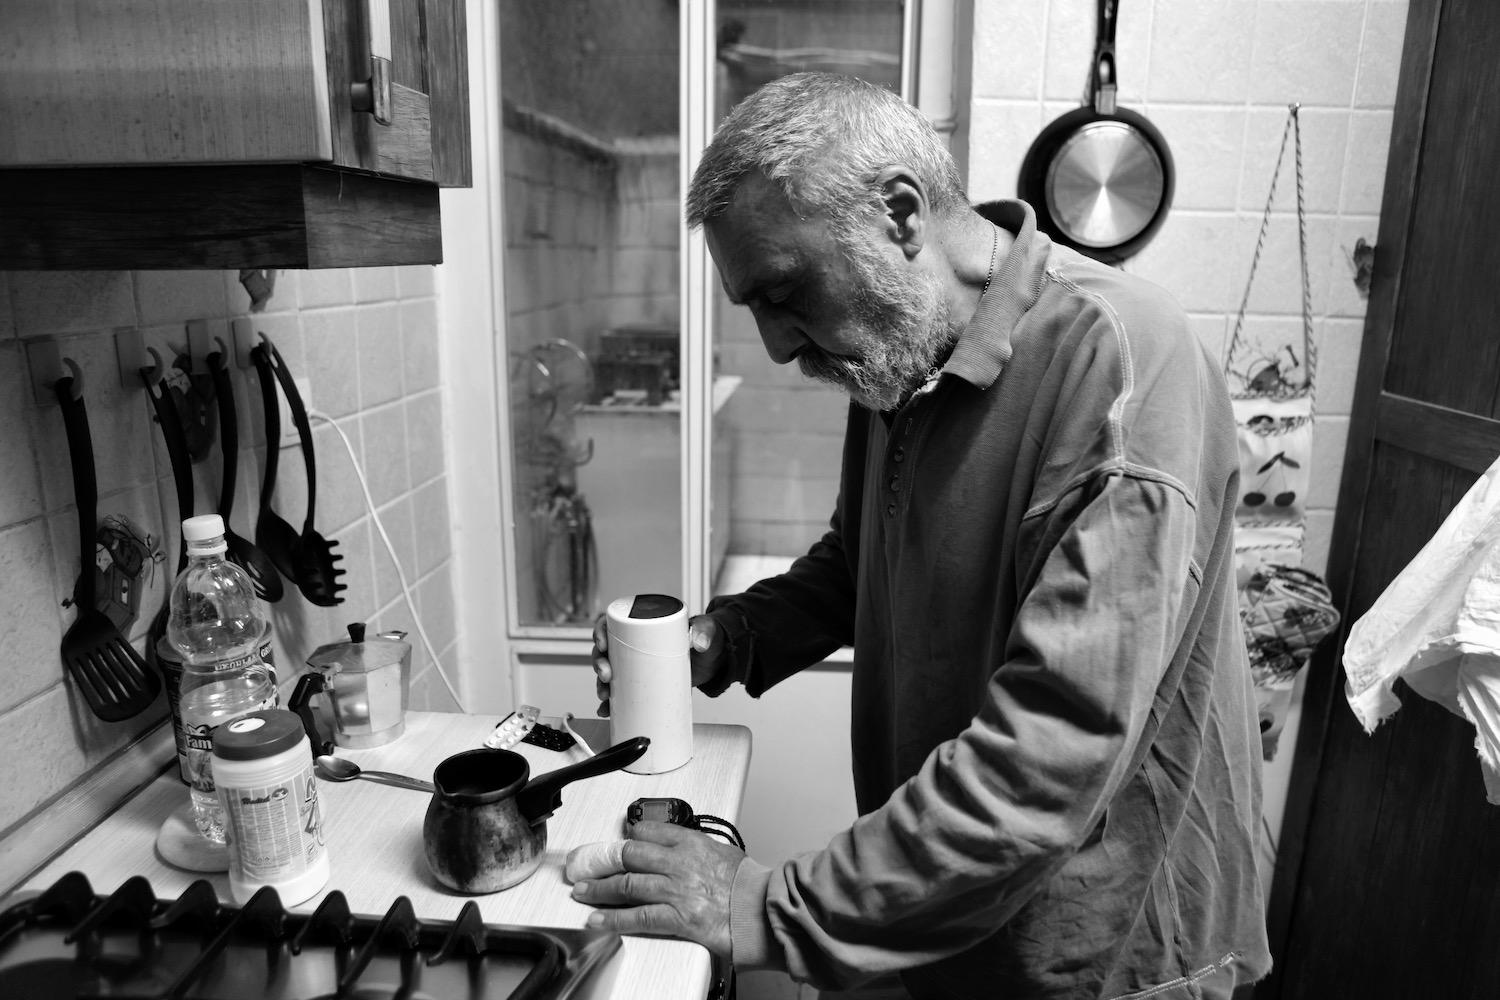 No Regret -   Kamran preparing coffee in his kitchen. Tehran, Iran  